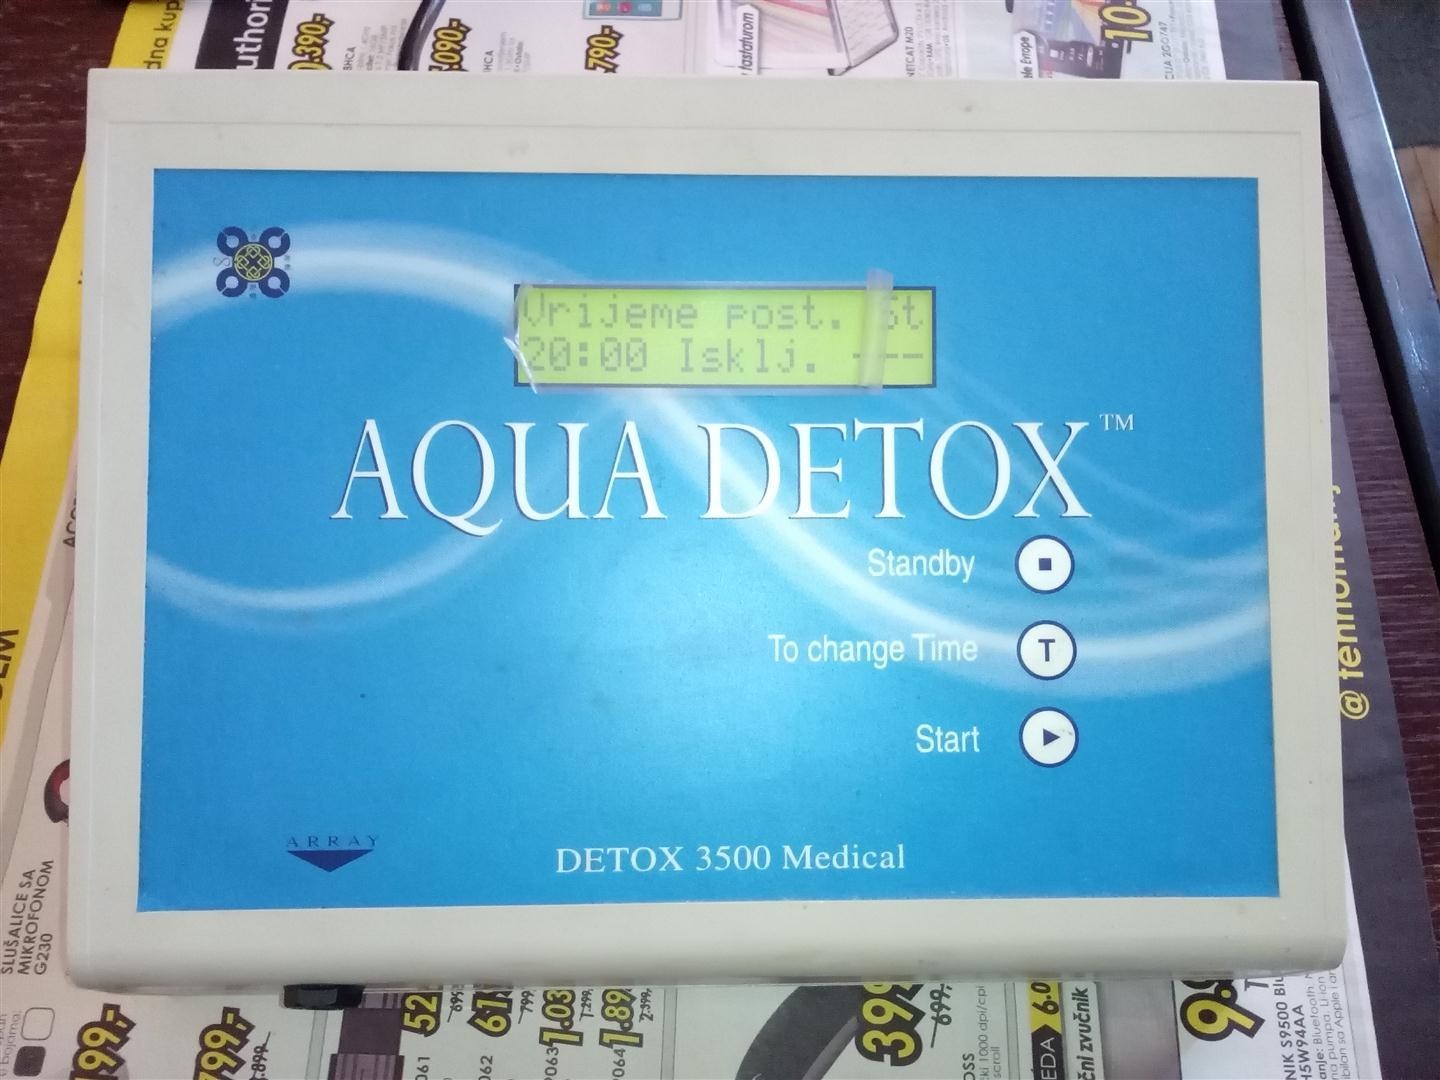 aqua detox kadica prodaja)